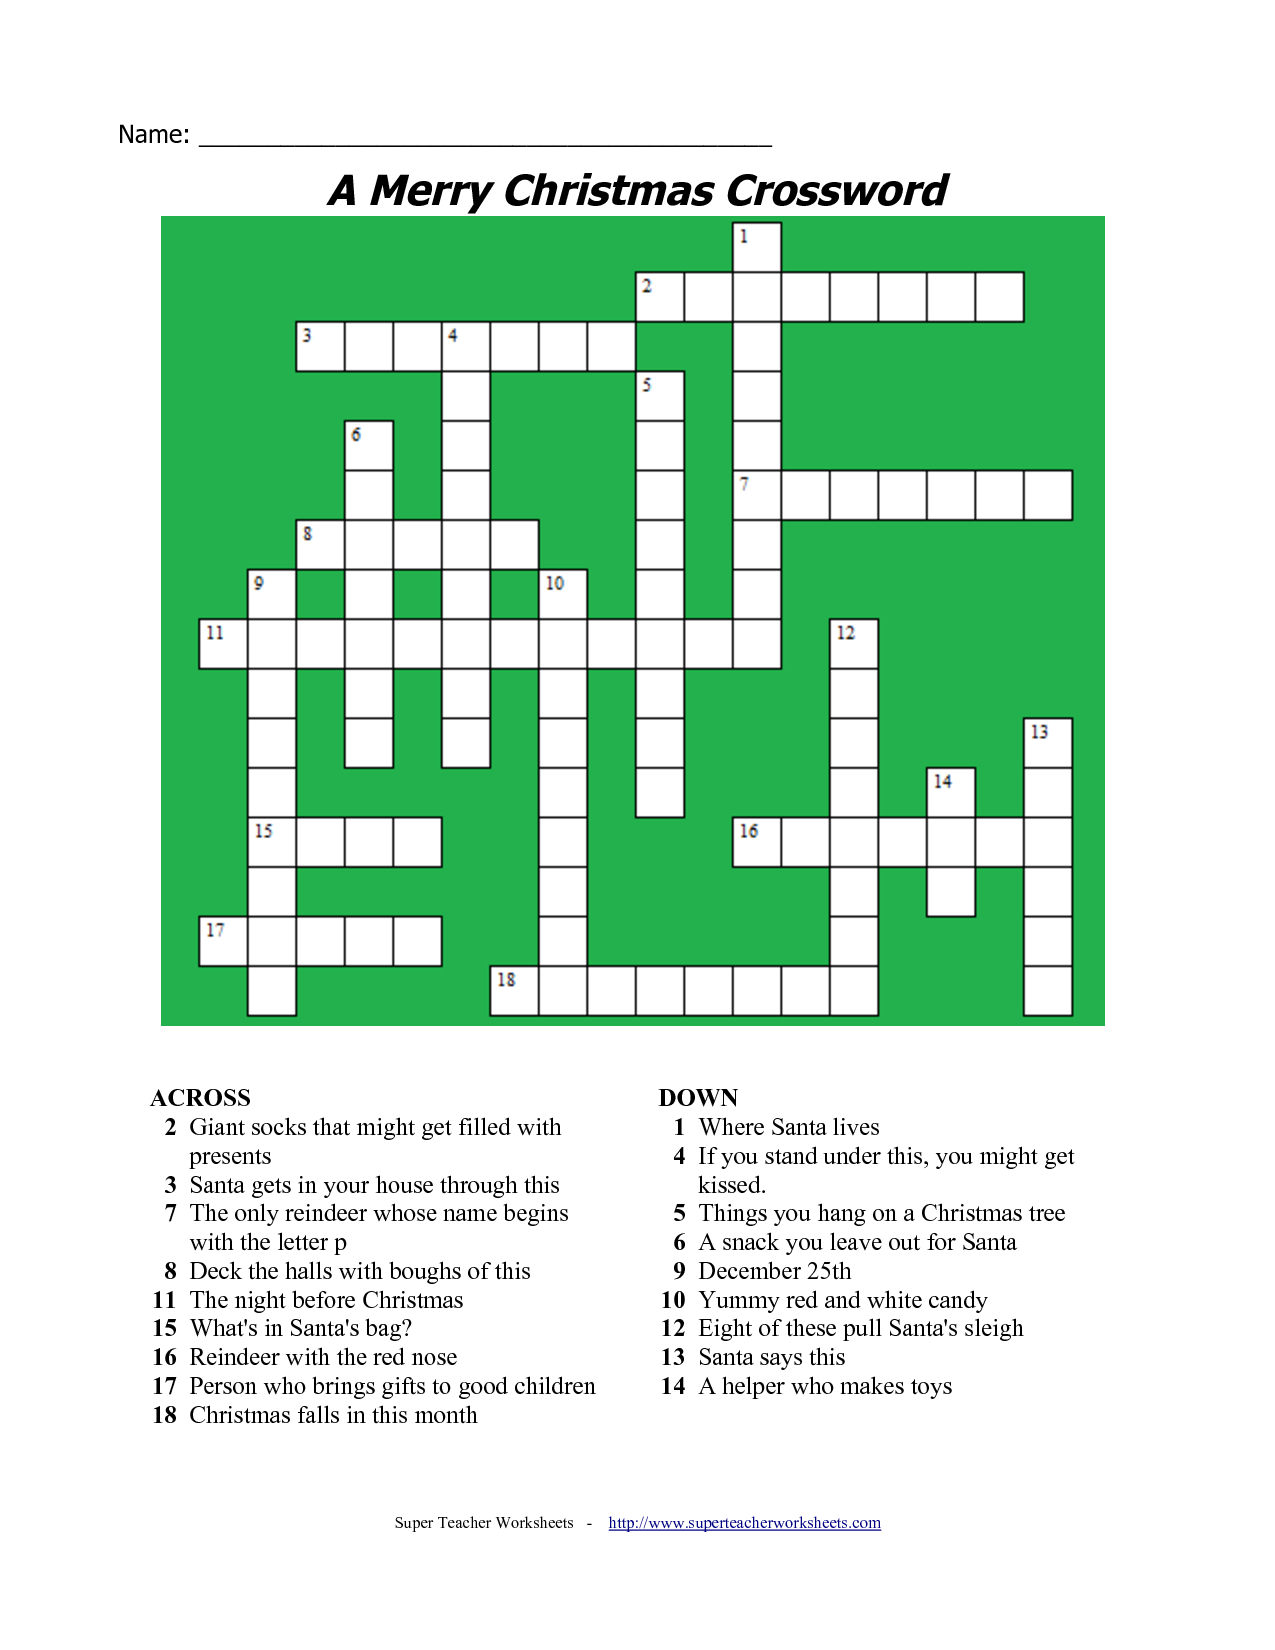 20 Fun Printable Christmas Crossword Puzzles | Kittybabylove - Printable Holiday Crossword Puzzles